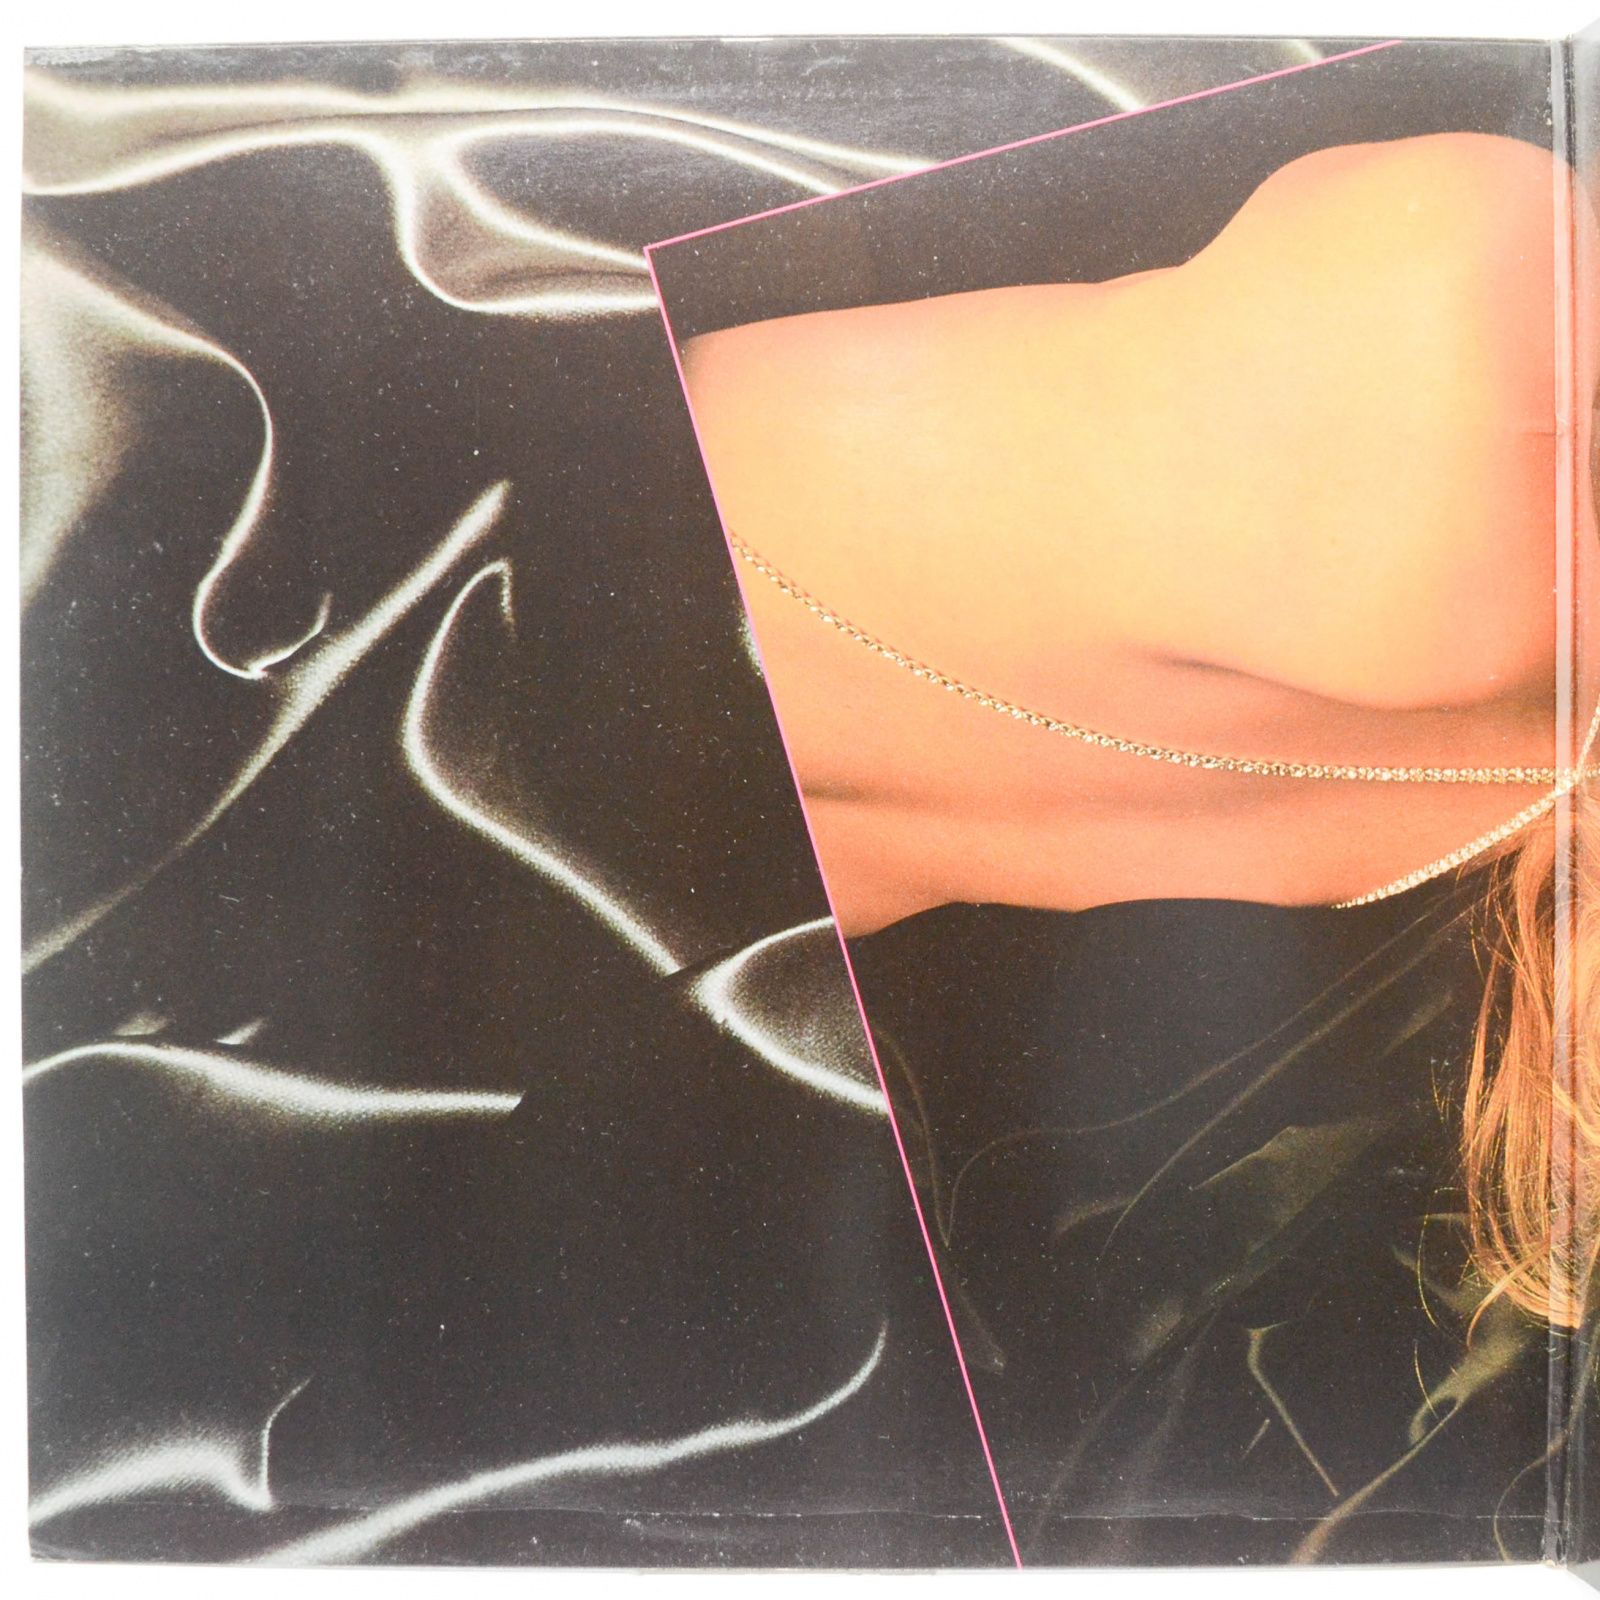 Bonnie Tyler — Diamond Cut (1-st, UK), 1979